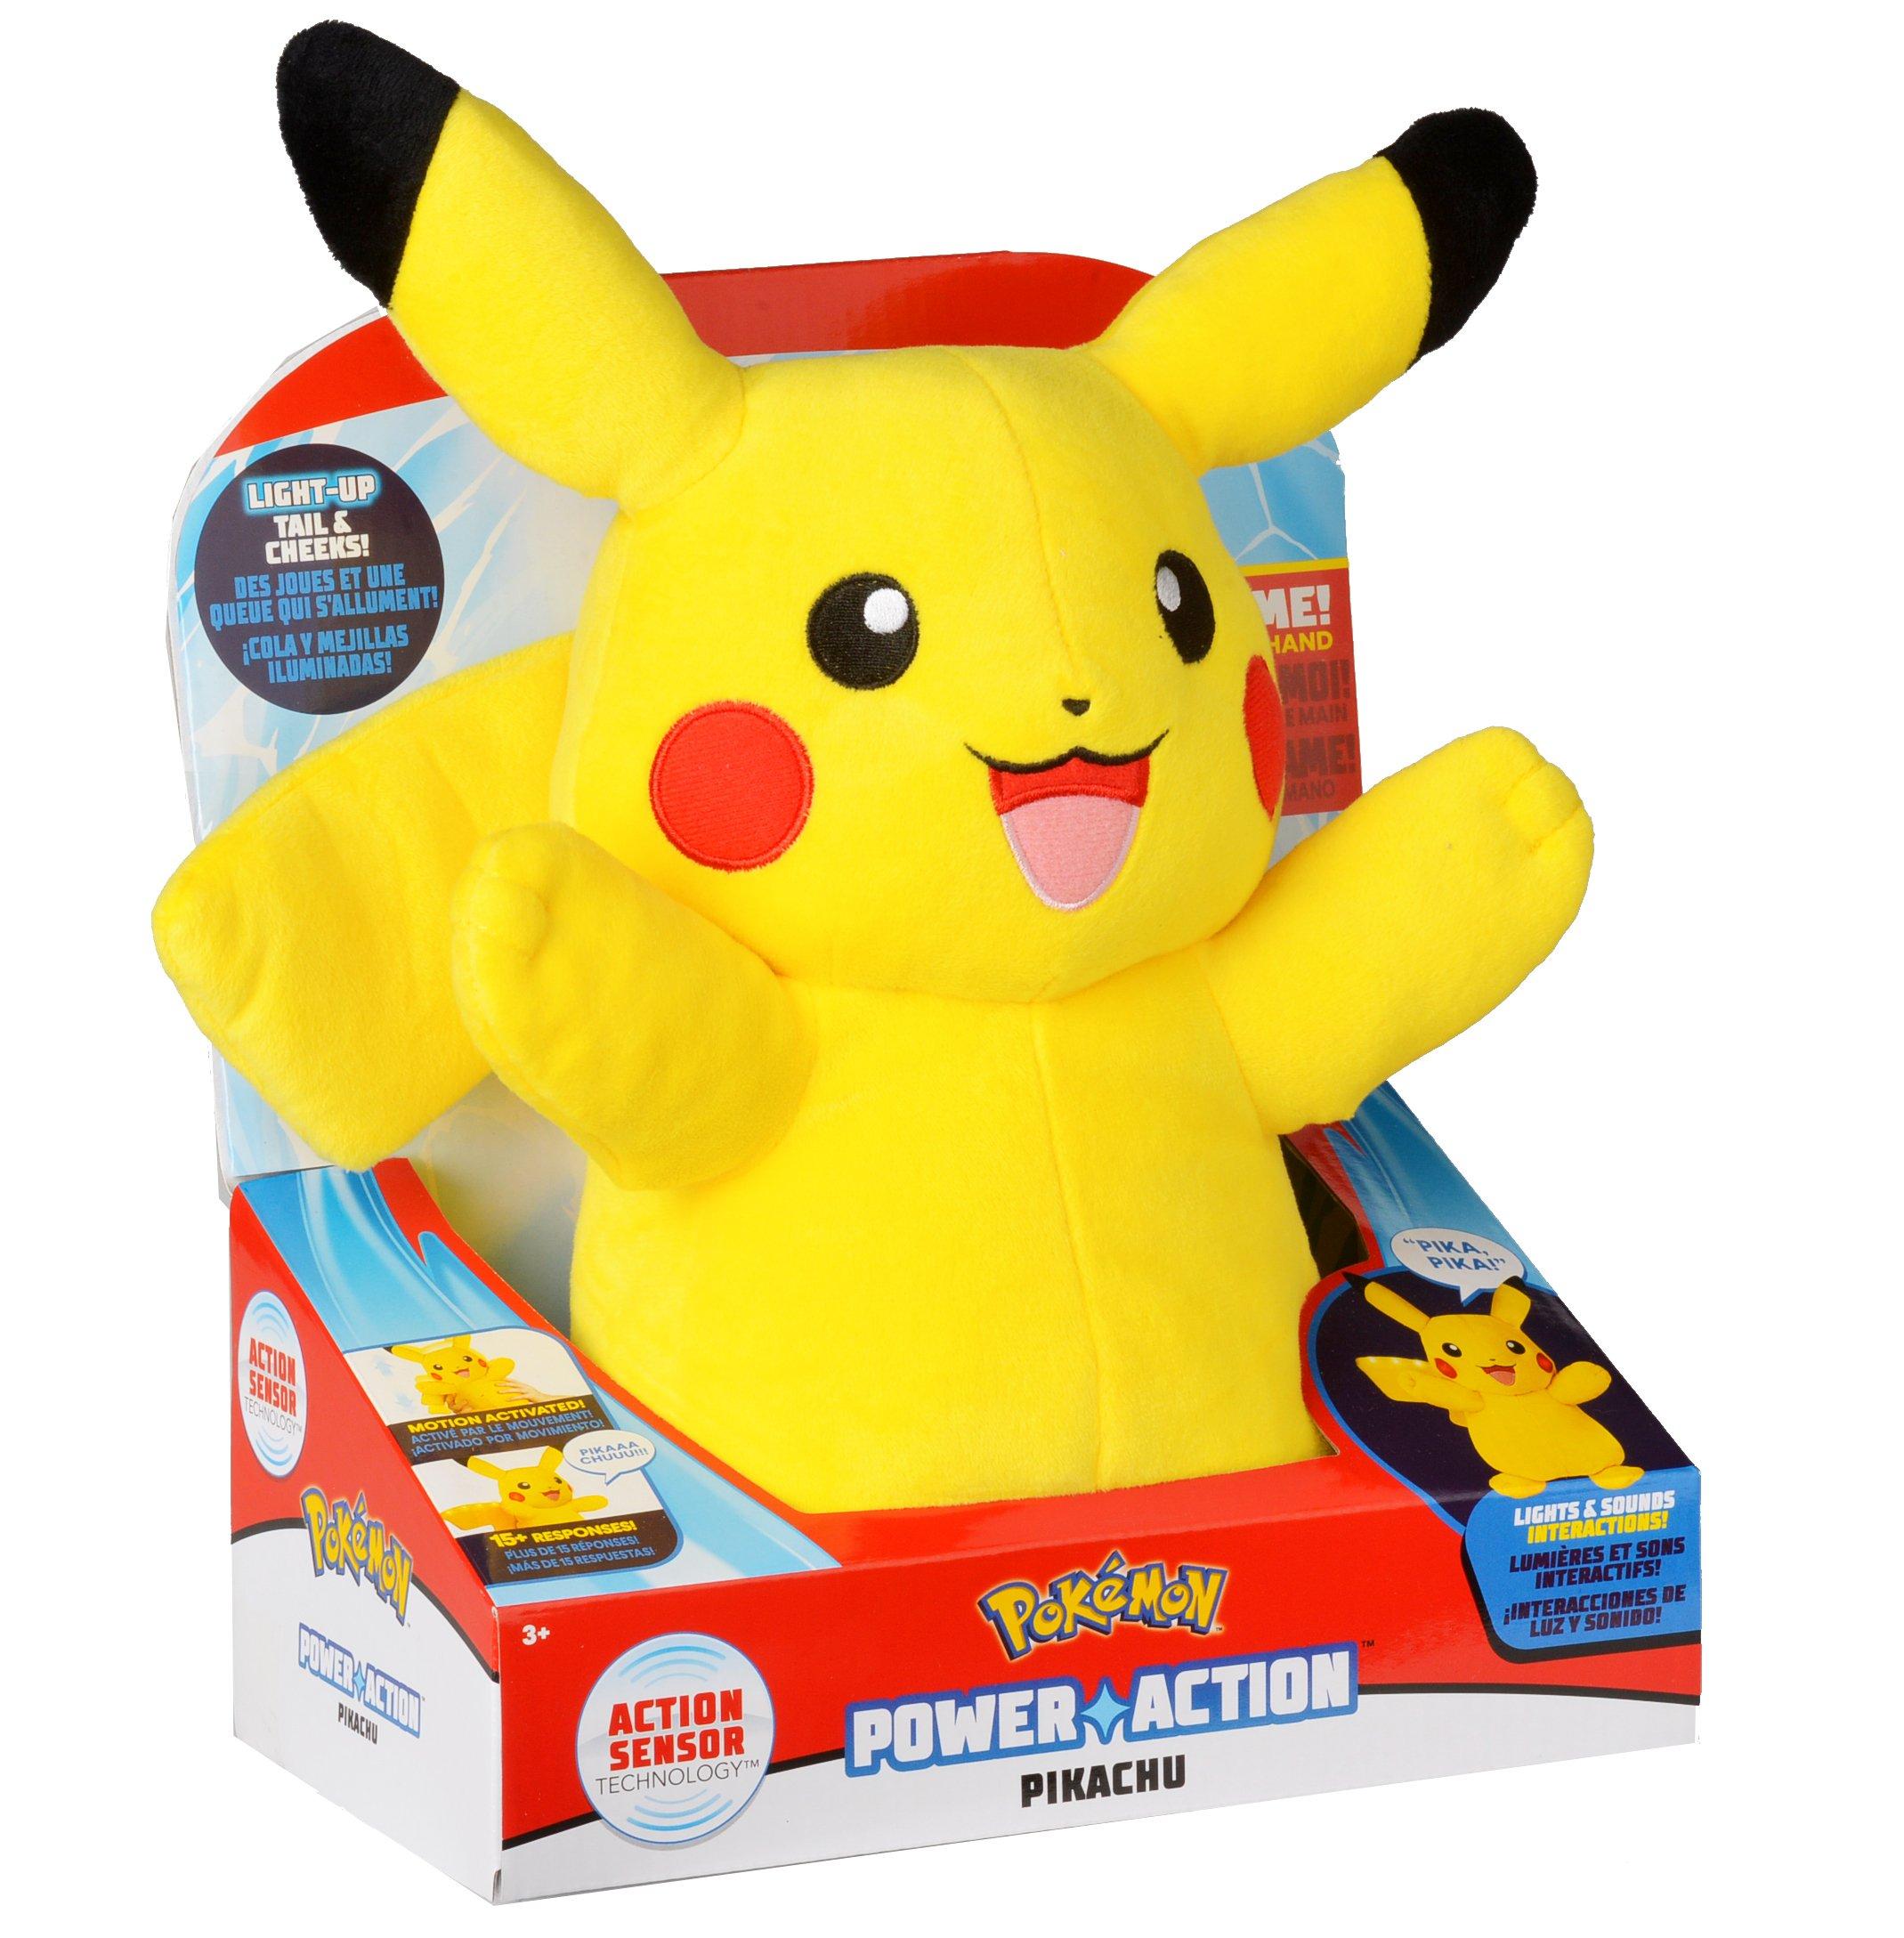 Pokemon Power Action Pikachu Plush Gamestop